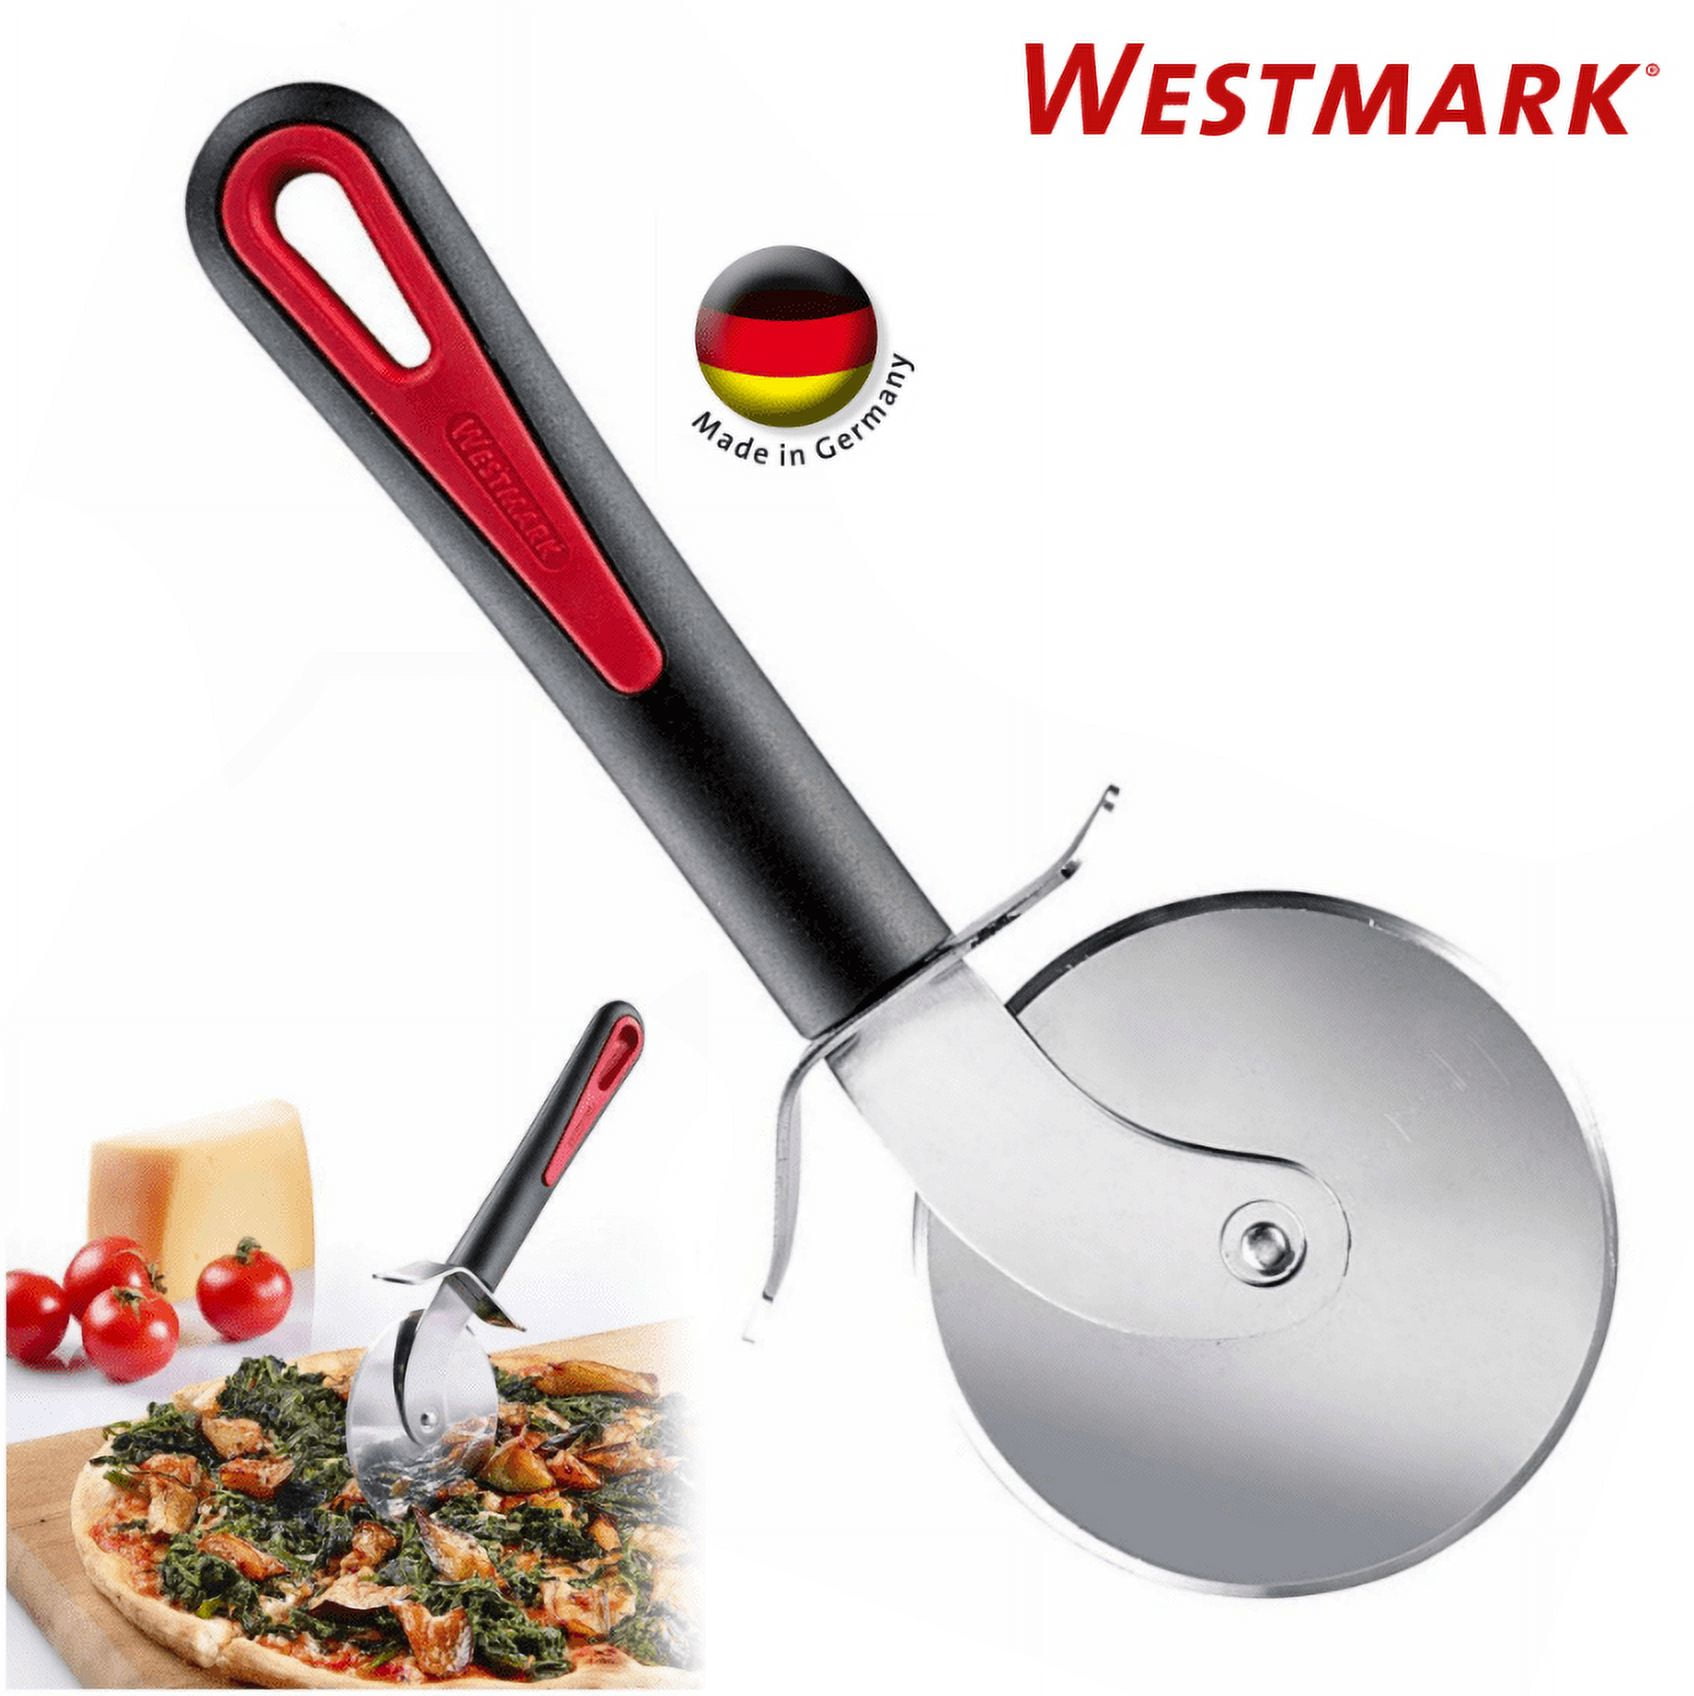 Westmark German Heavy Duty Stainless Steel Pizza Cutter Slicer Wheel 3 inch  Red